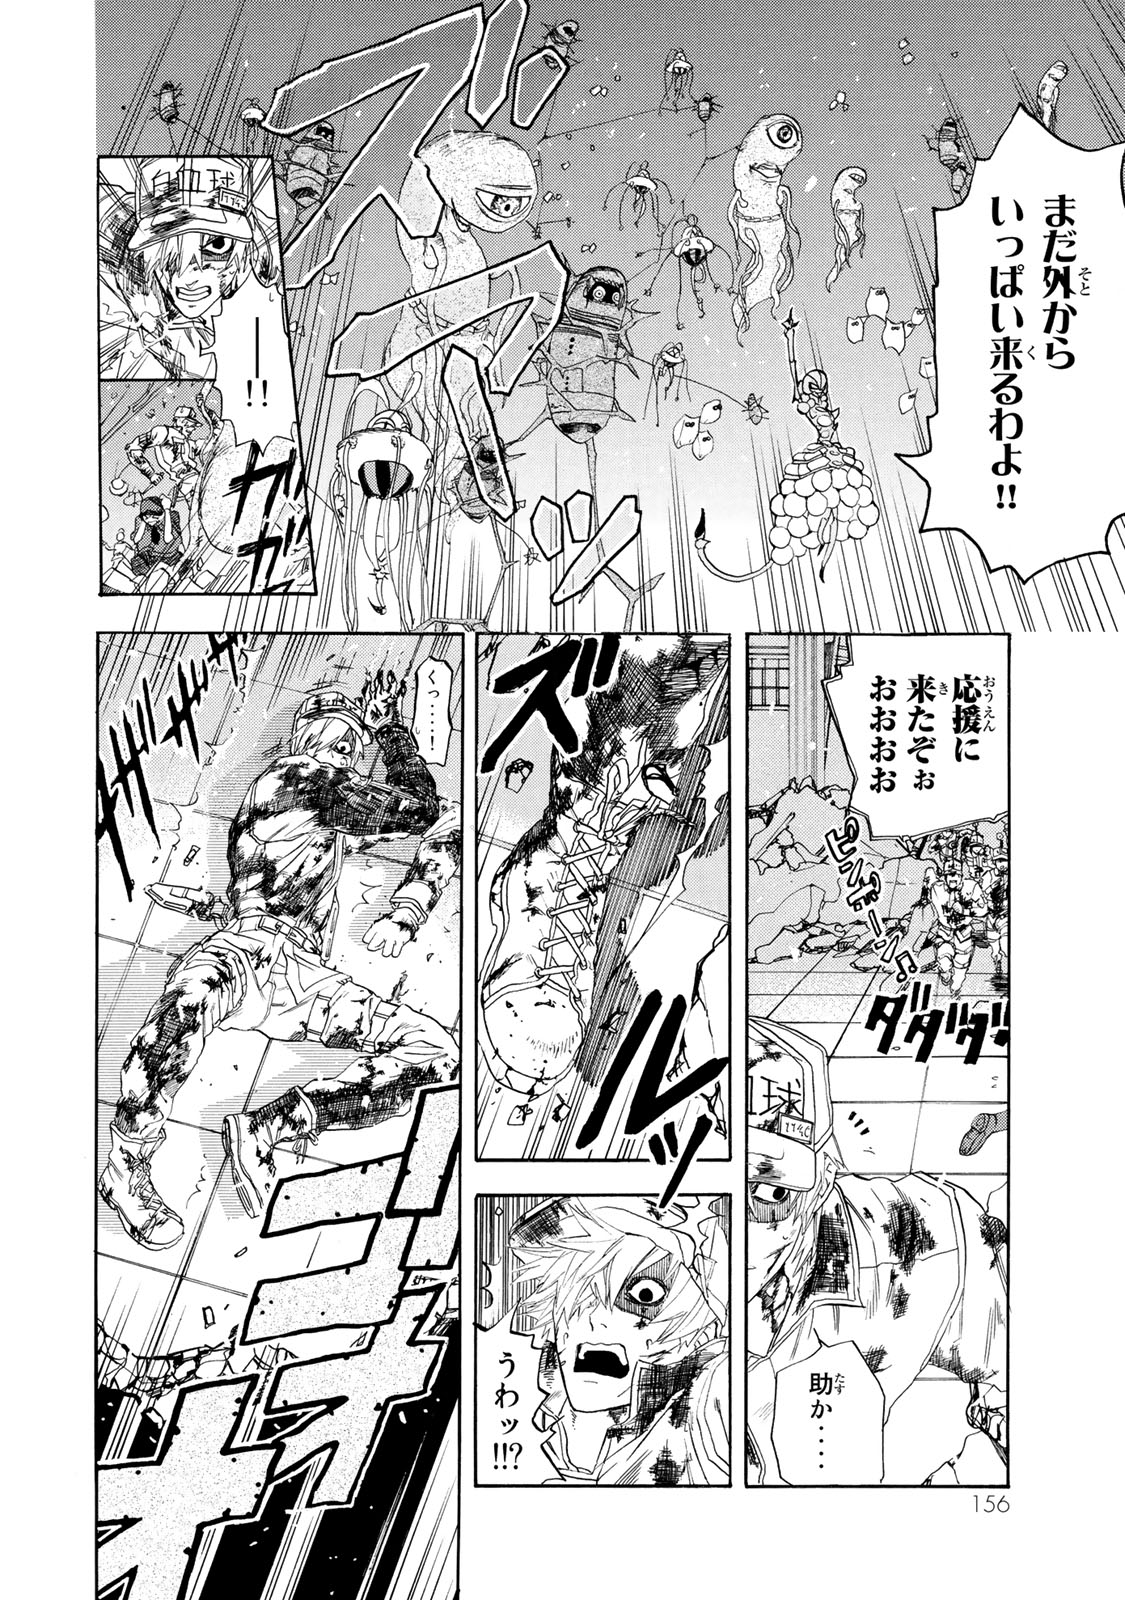 Hataraku Saibou - Chapter 4 - Page 20